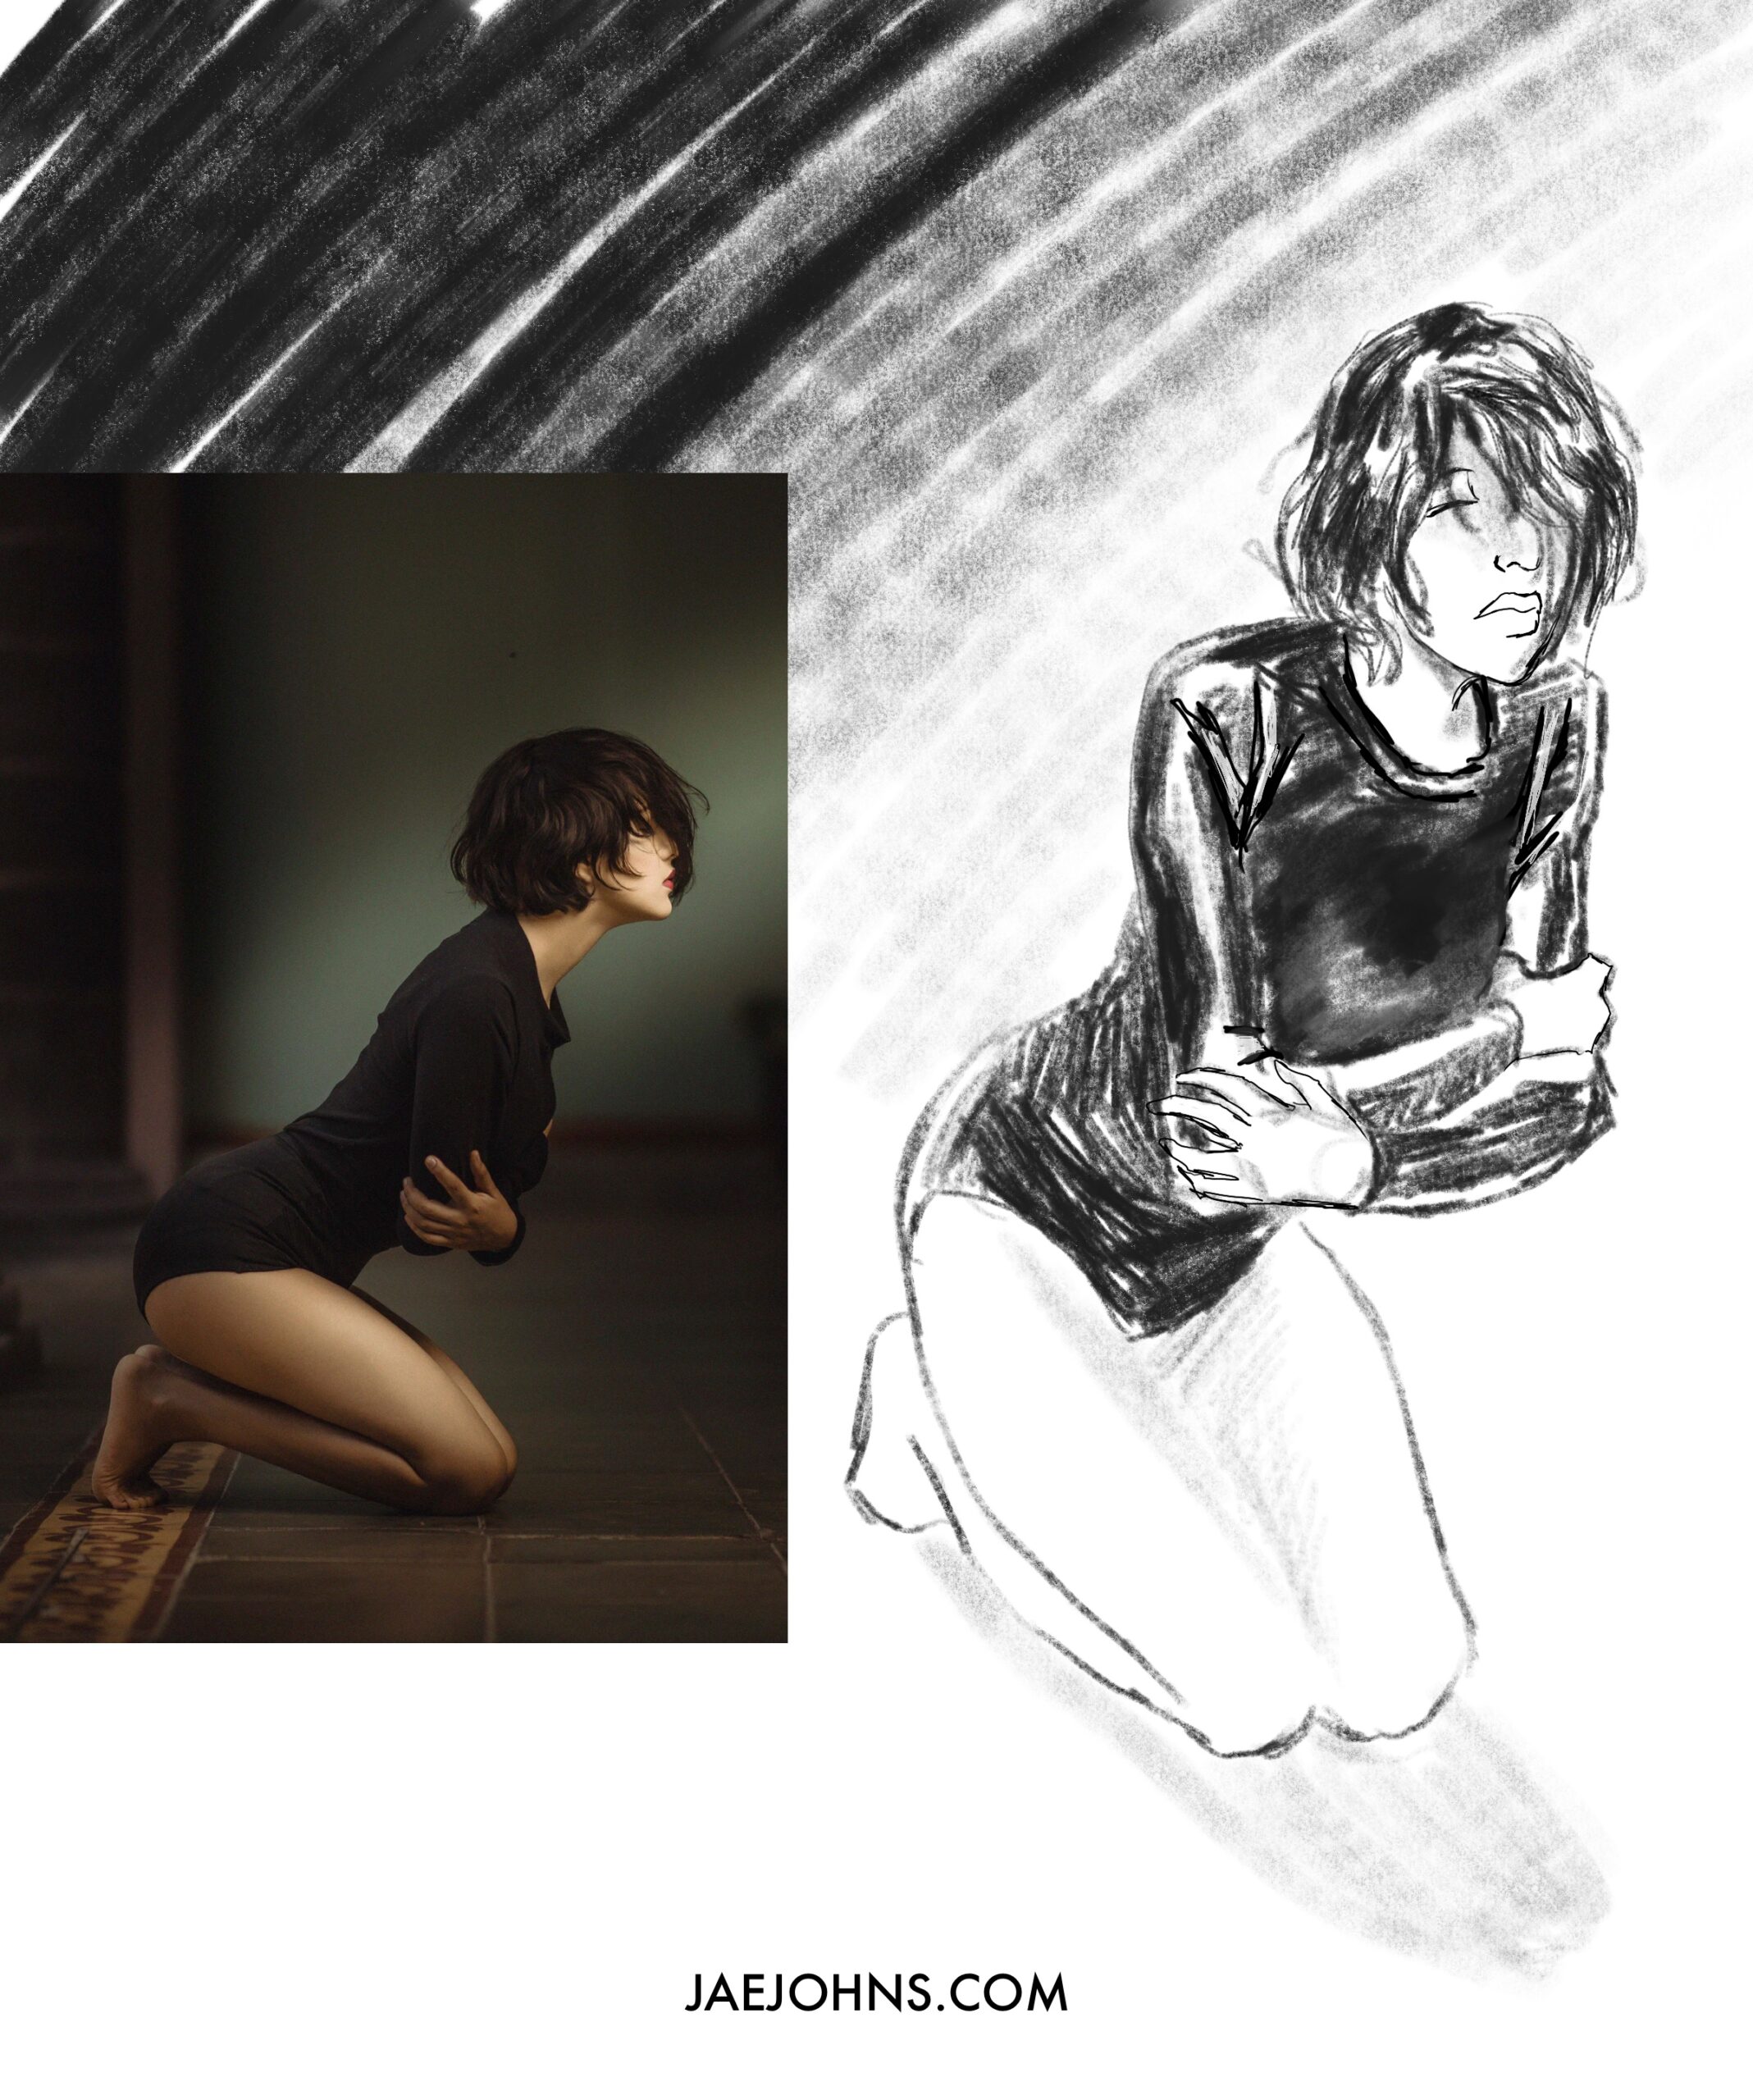 How to Draw Anime Poses - Anime Girl, Body, Cute Poses - Jae Johns